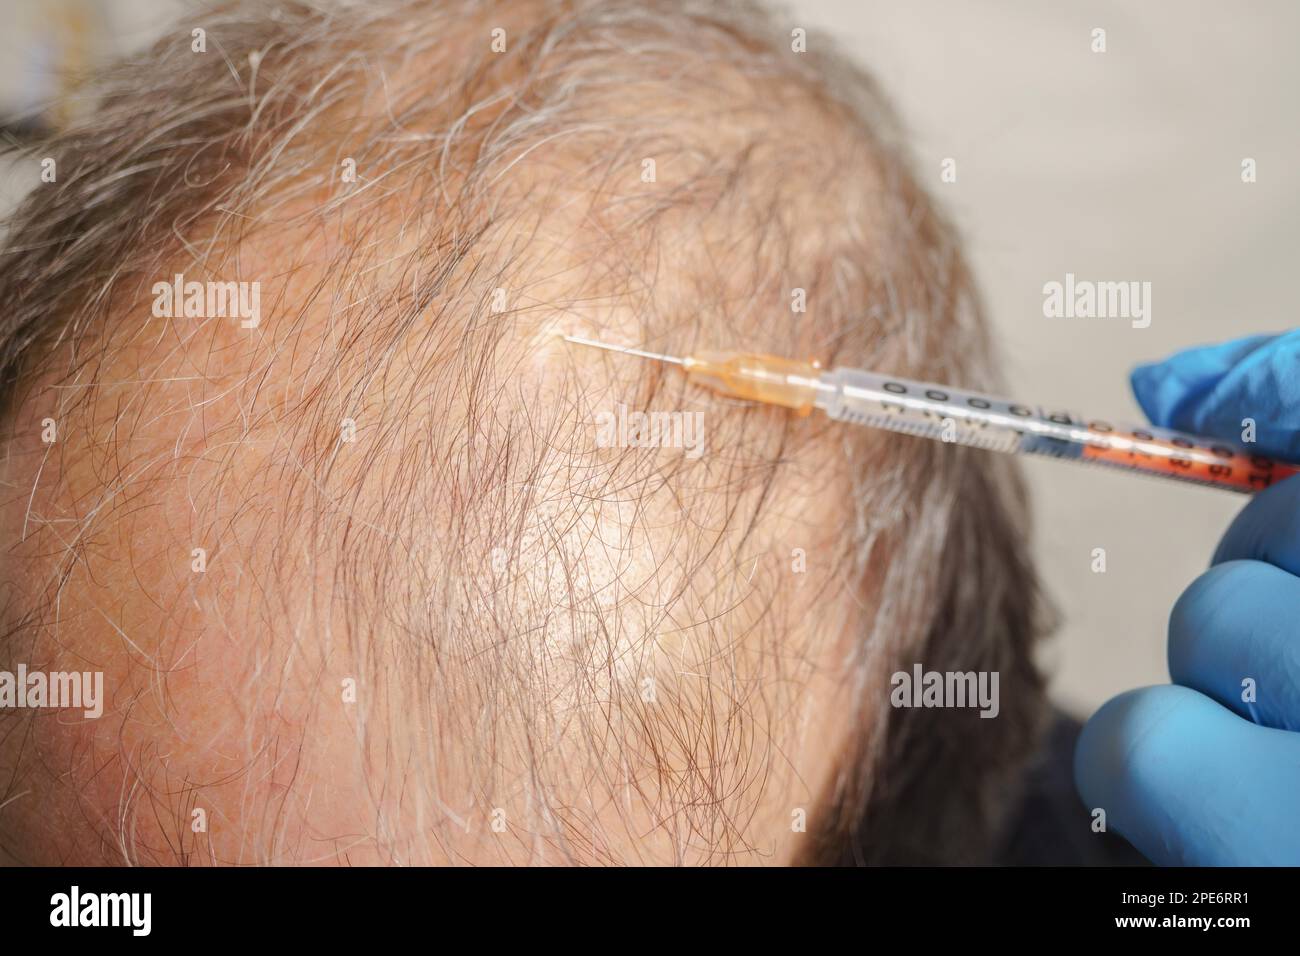 Hair transplantation, hair follicle transplantation, treatment of baldness and strengthening the scalp Stock Photo